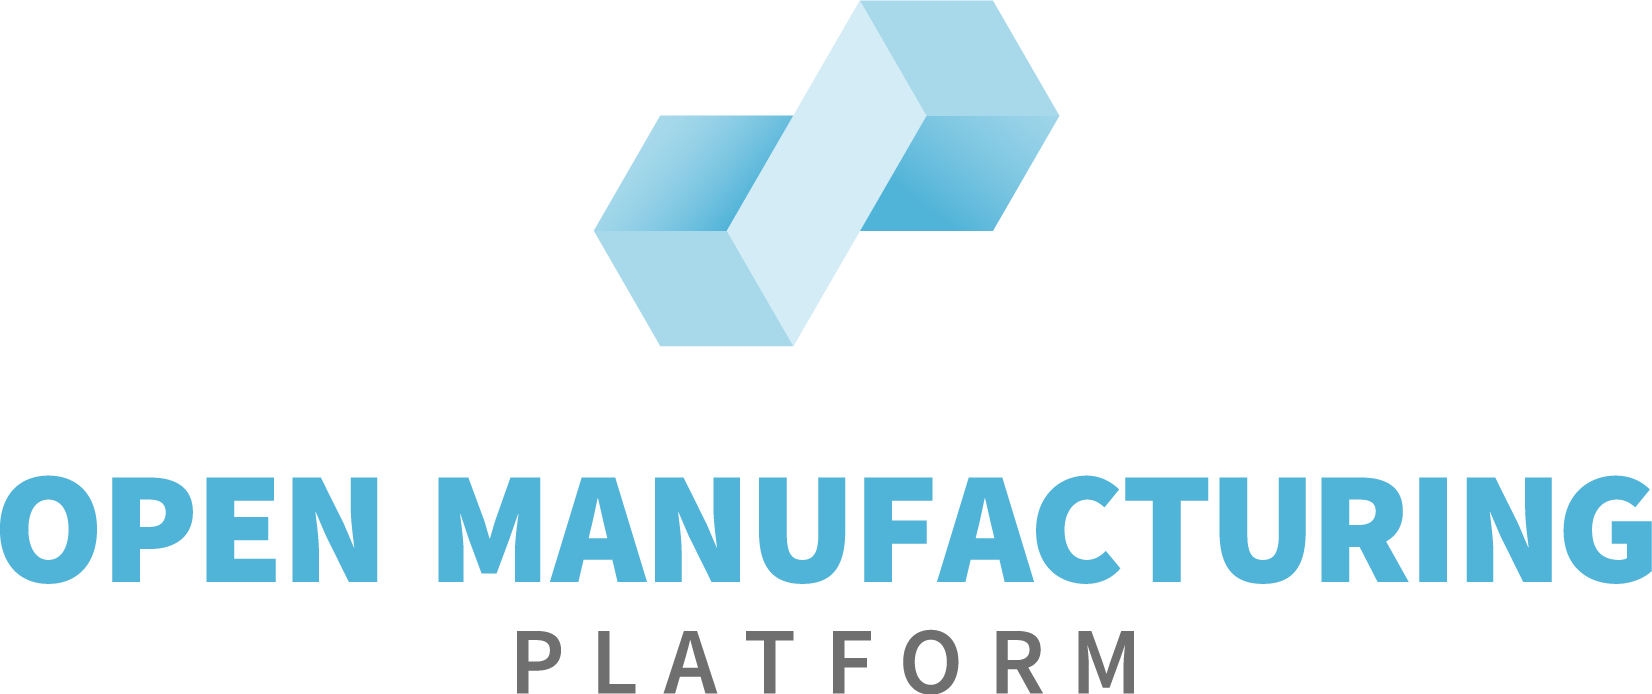 open manufacturing logo